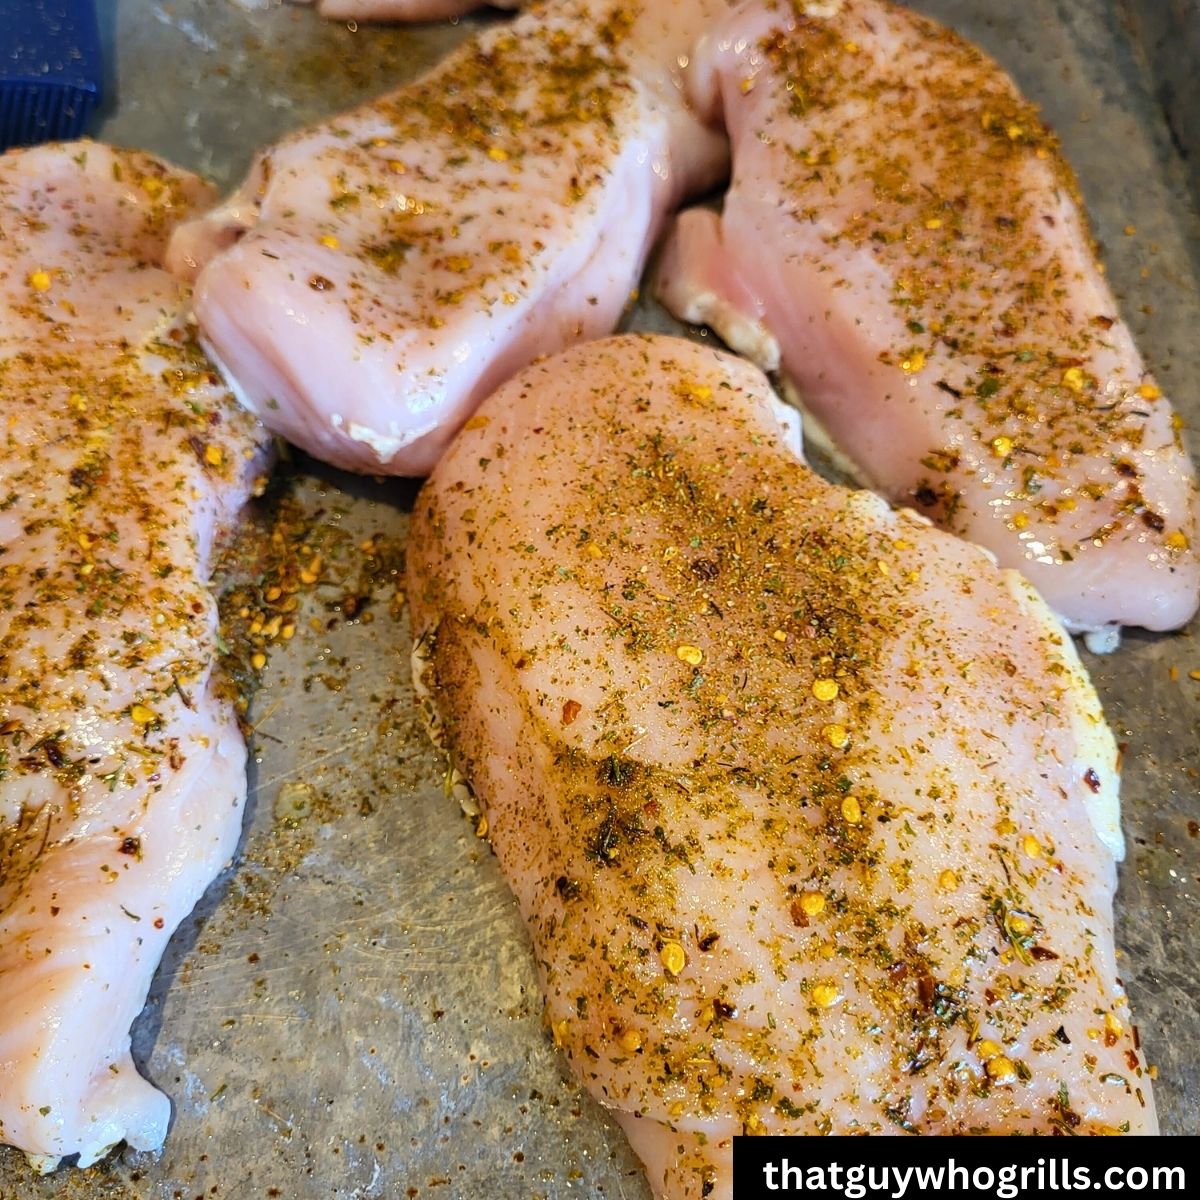 Raw boneless skinless chicken breasts seasoned with seasoning on a cookie sheet